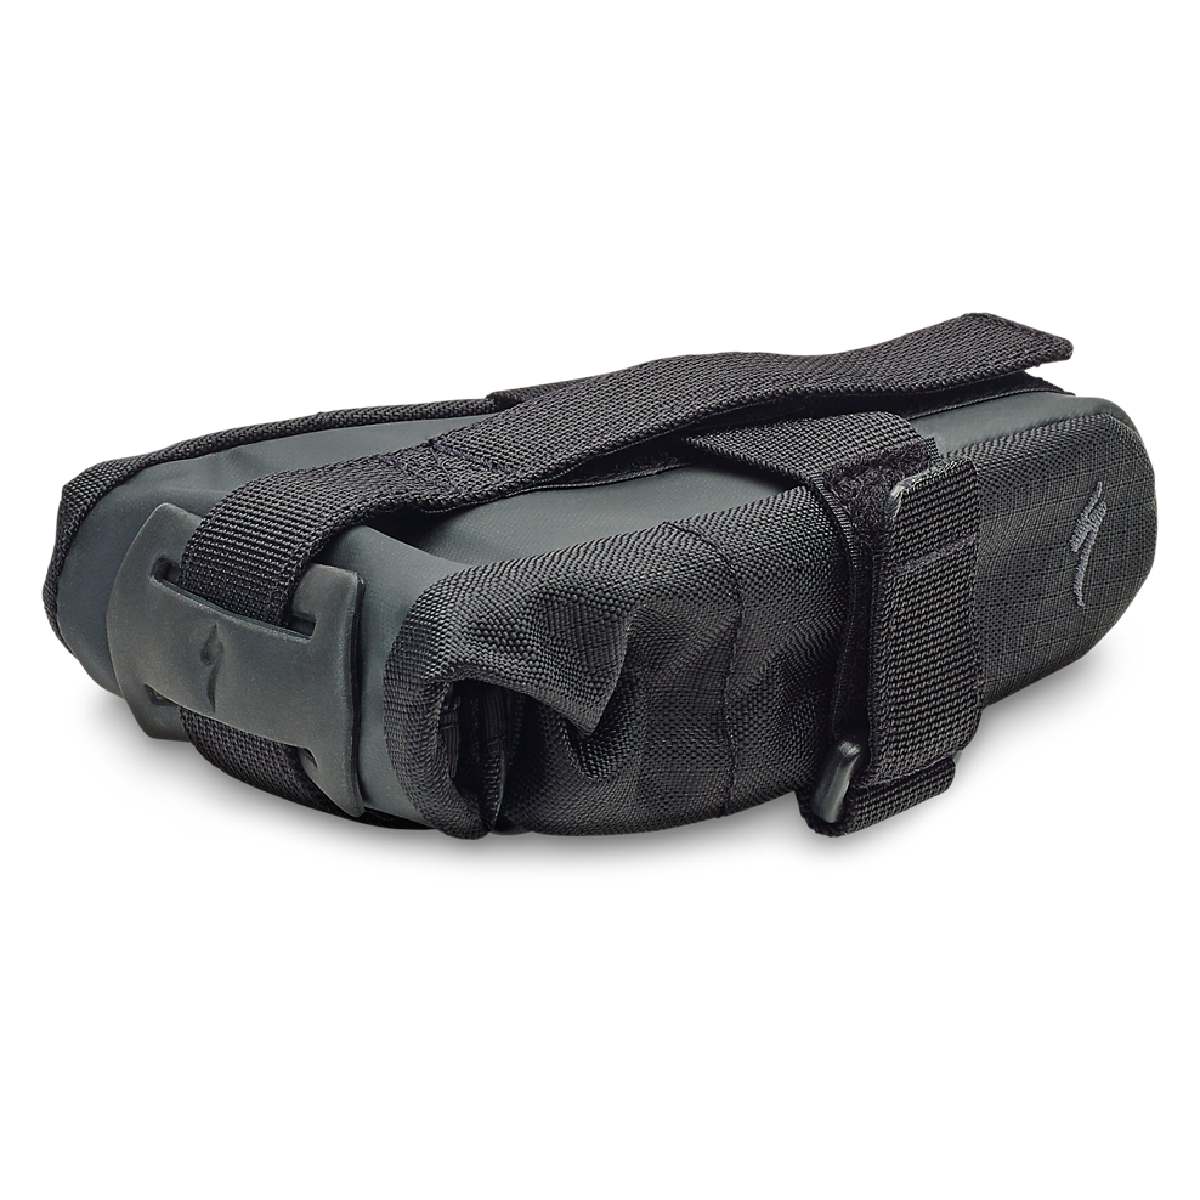  Specialized Seat Pack Saddle Bag Medium Black